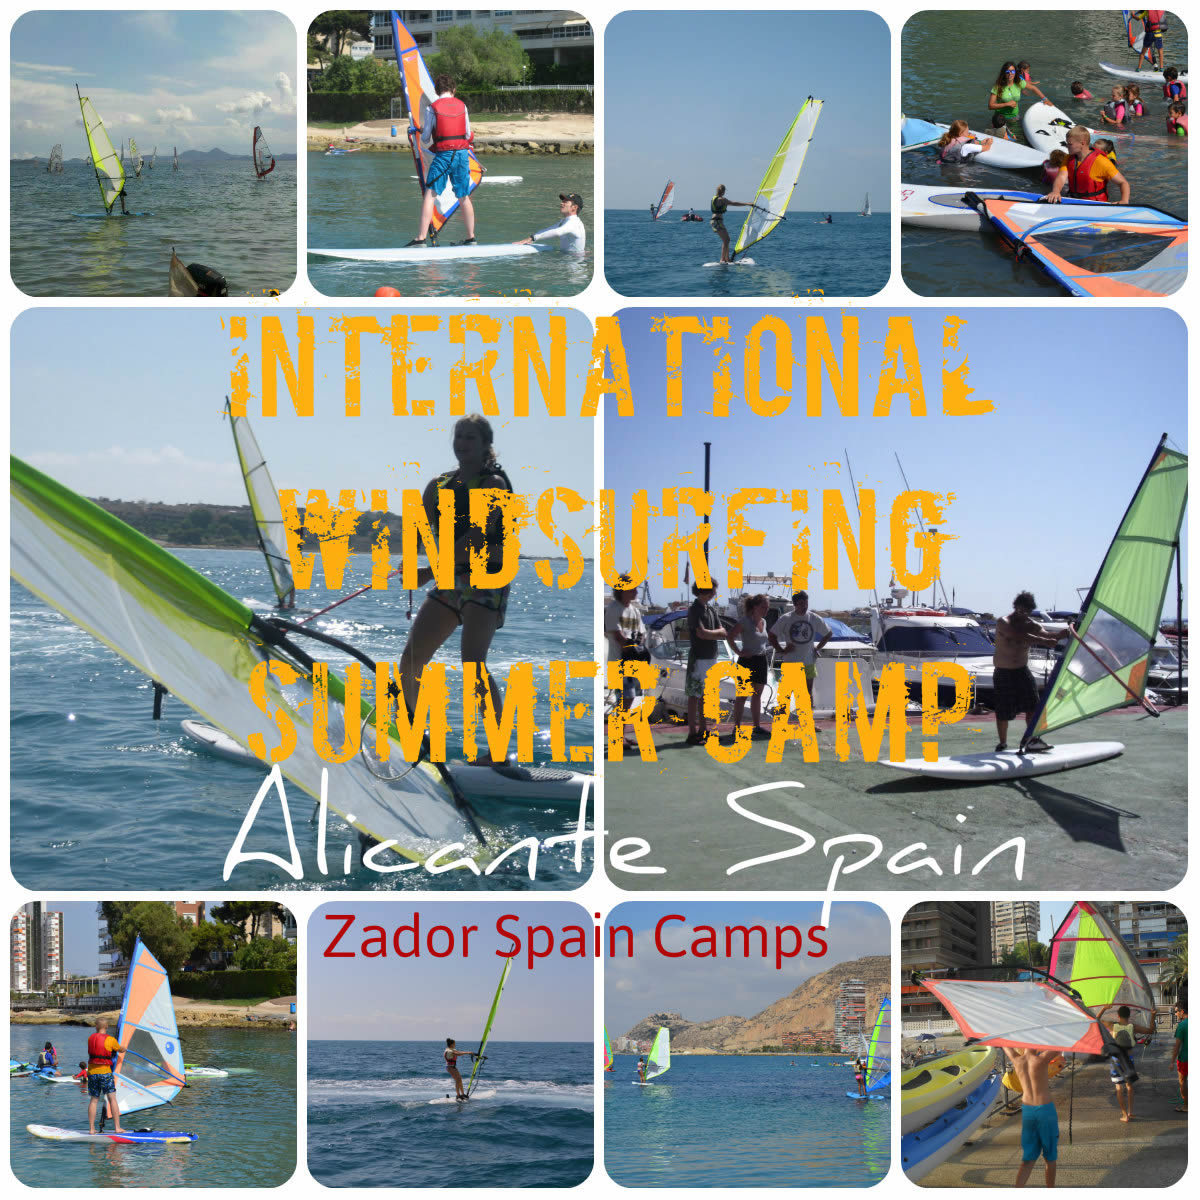 Windsurfing camp Alicante Spain